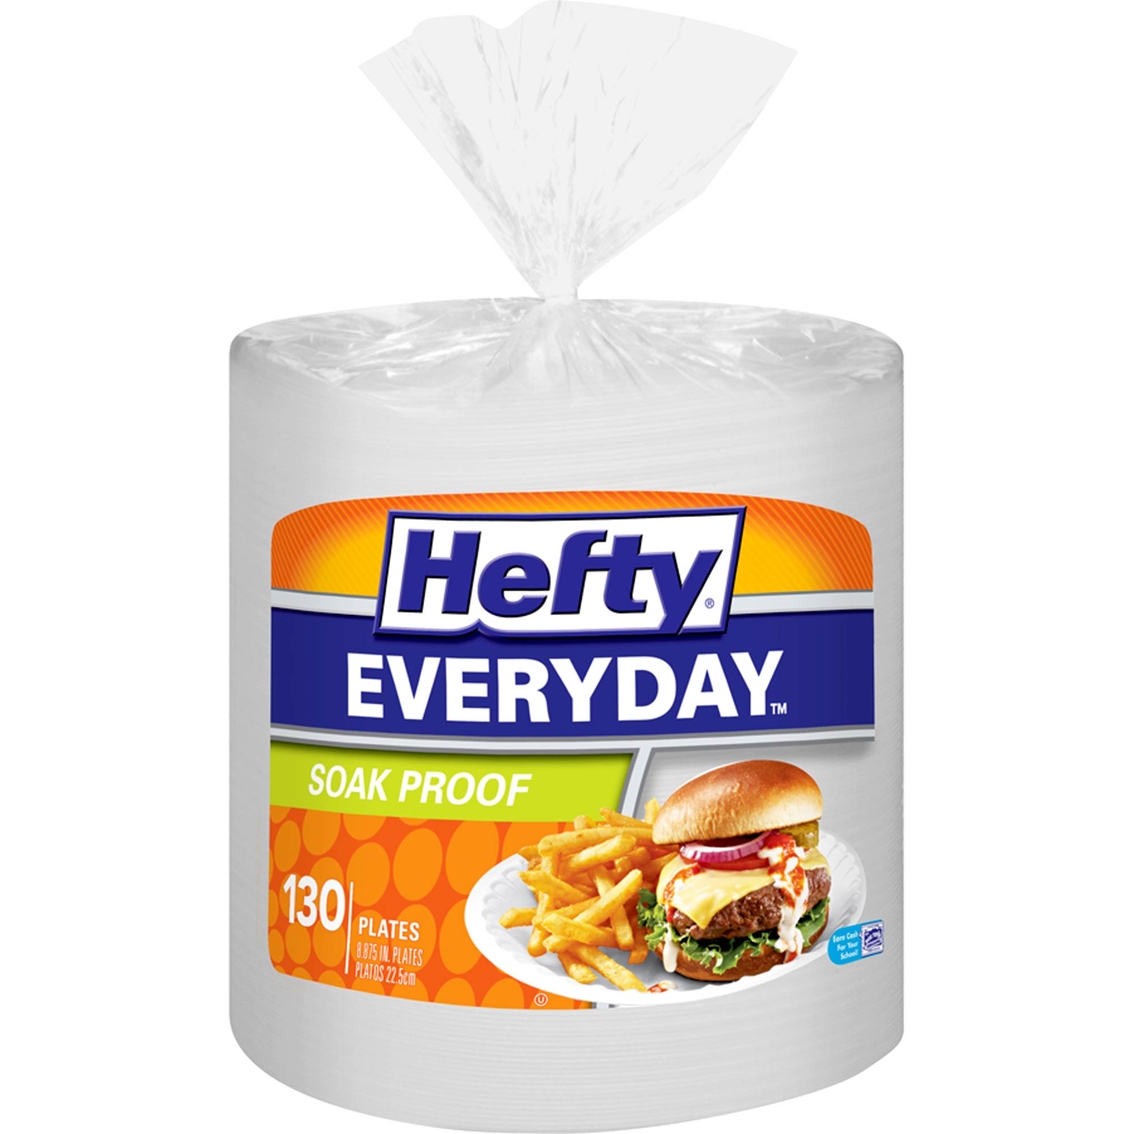 Hefty Everyday Foam Plate 130 Pk., Disposable Tableware & Napkins, Household